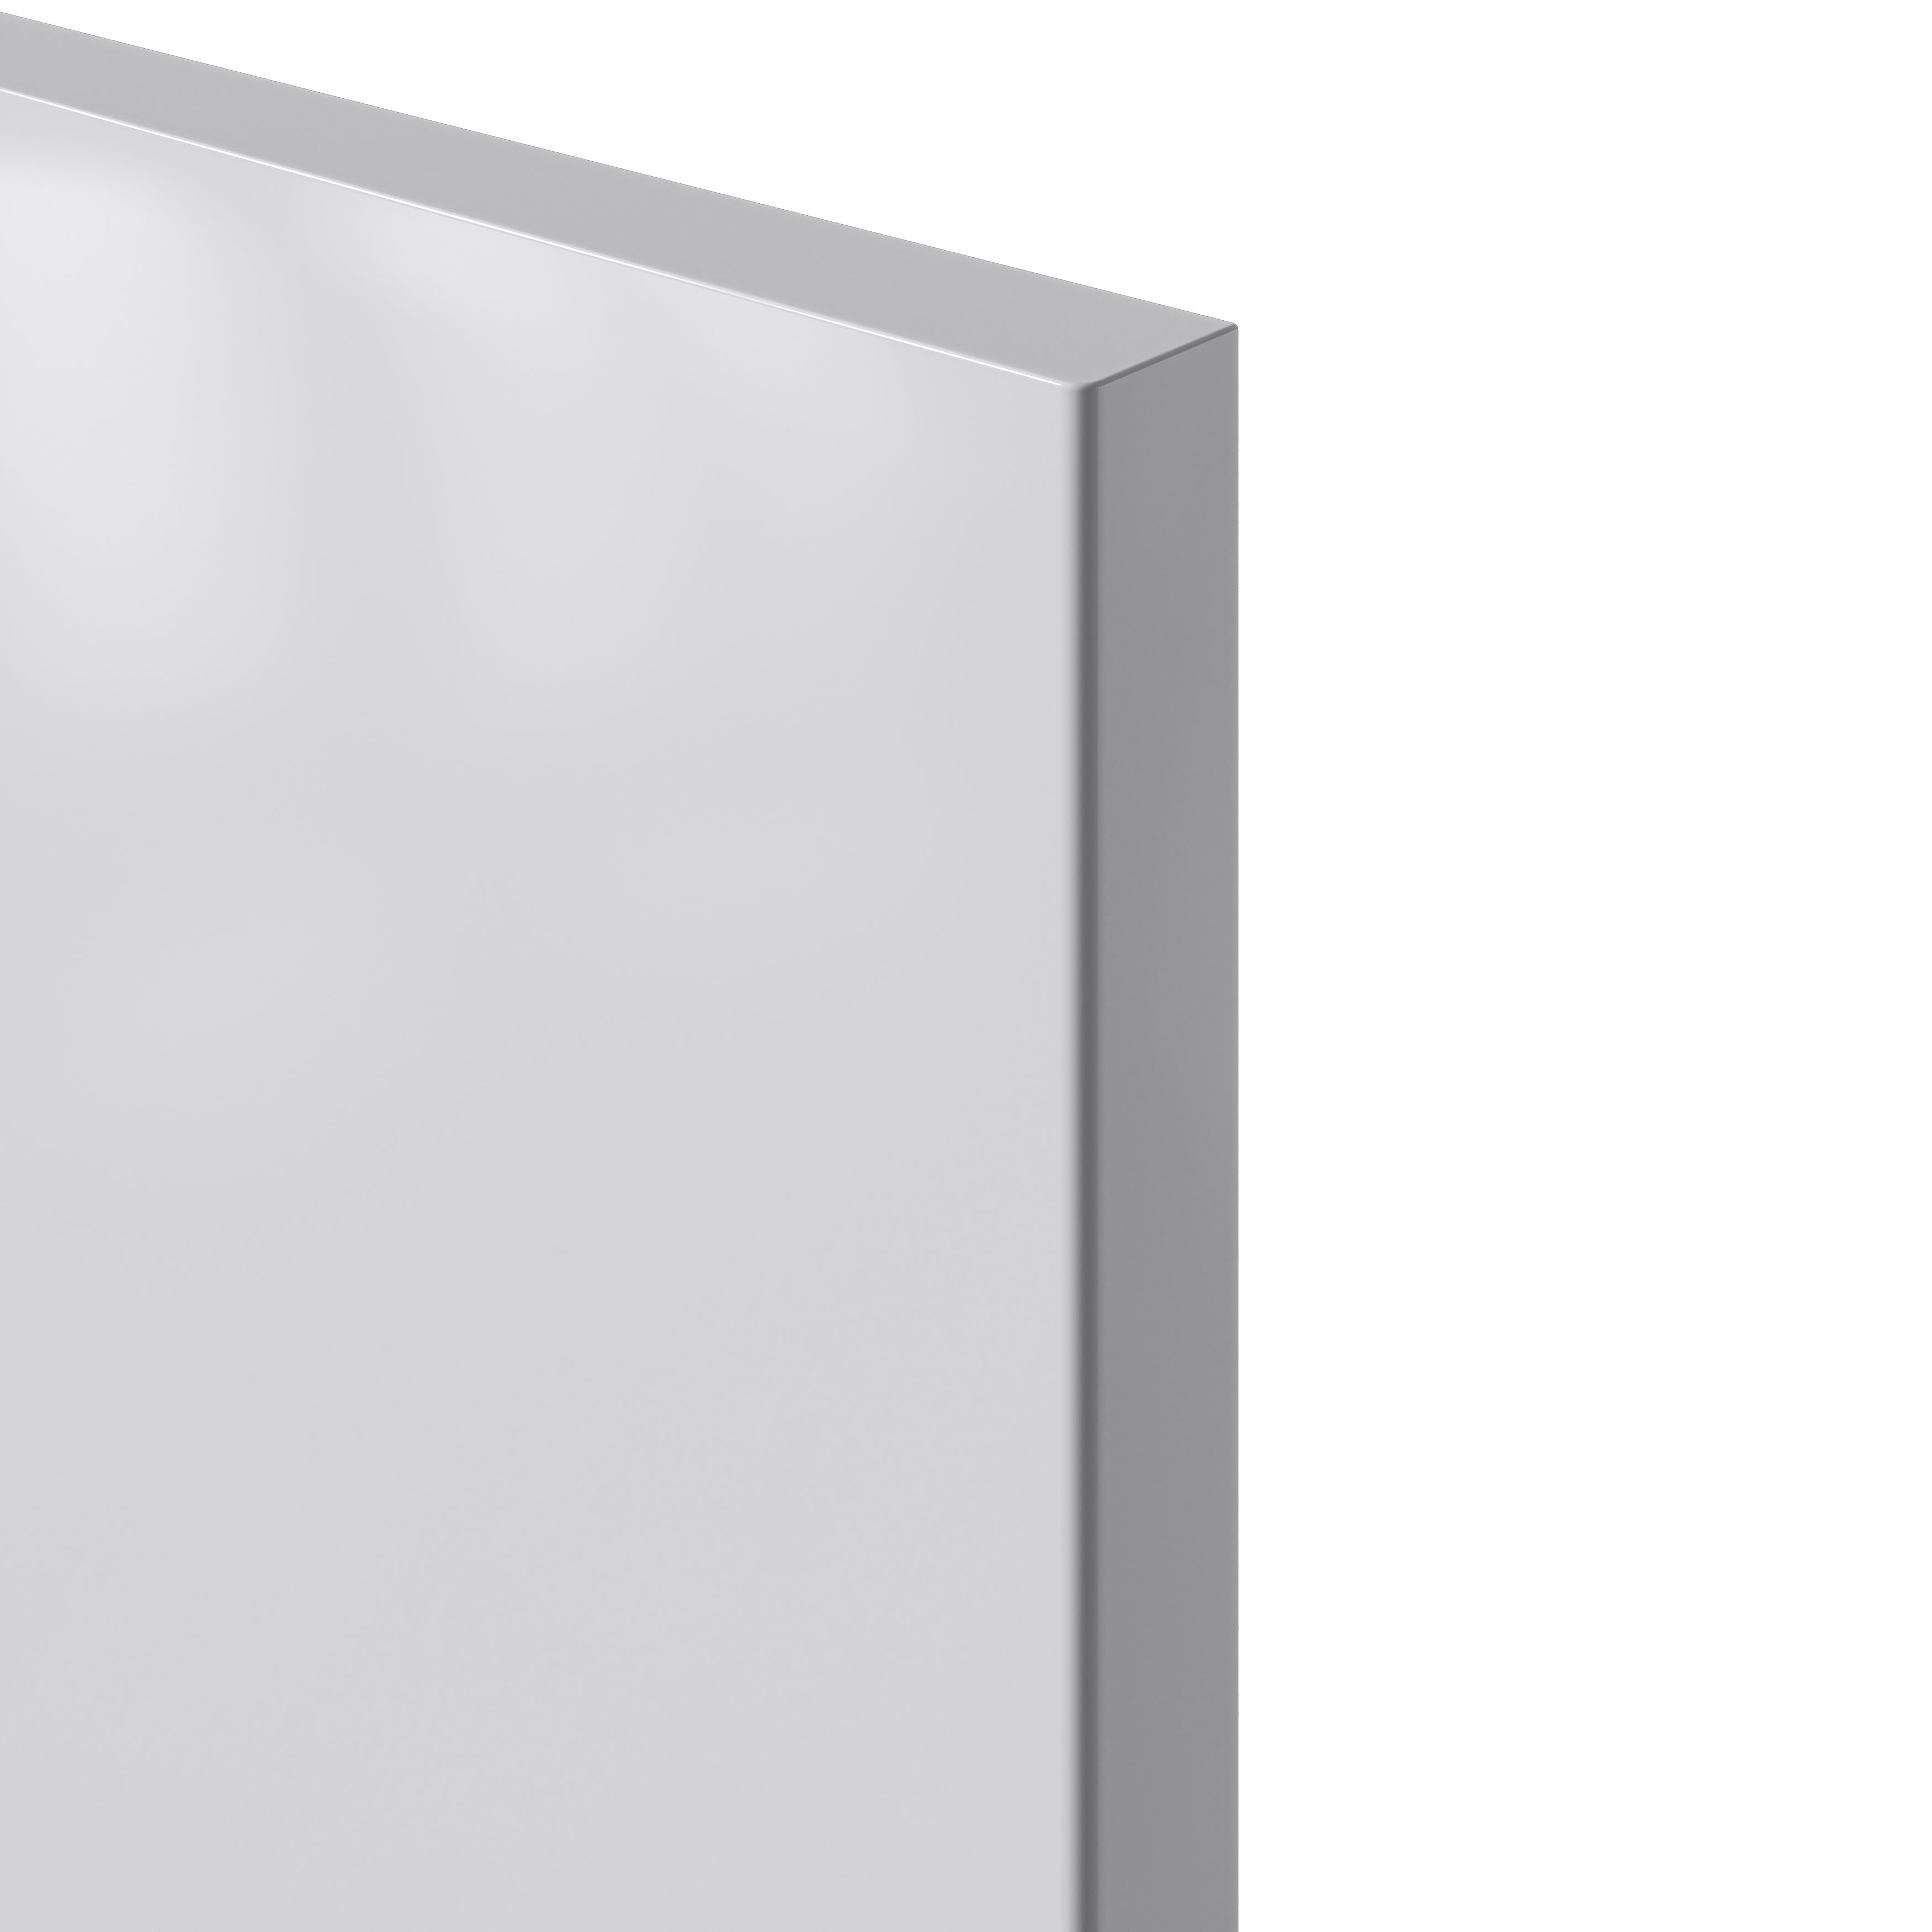 GoodHome Stevia Gloss light grey Drawer front, bridging door & bi fold door, (W)1000mm (H)340mm (T)18mm